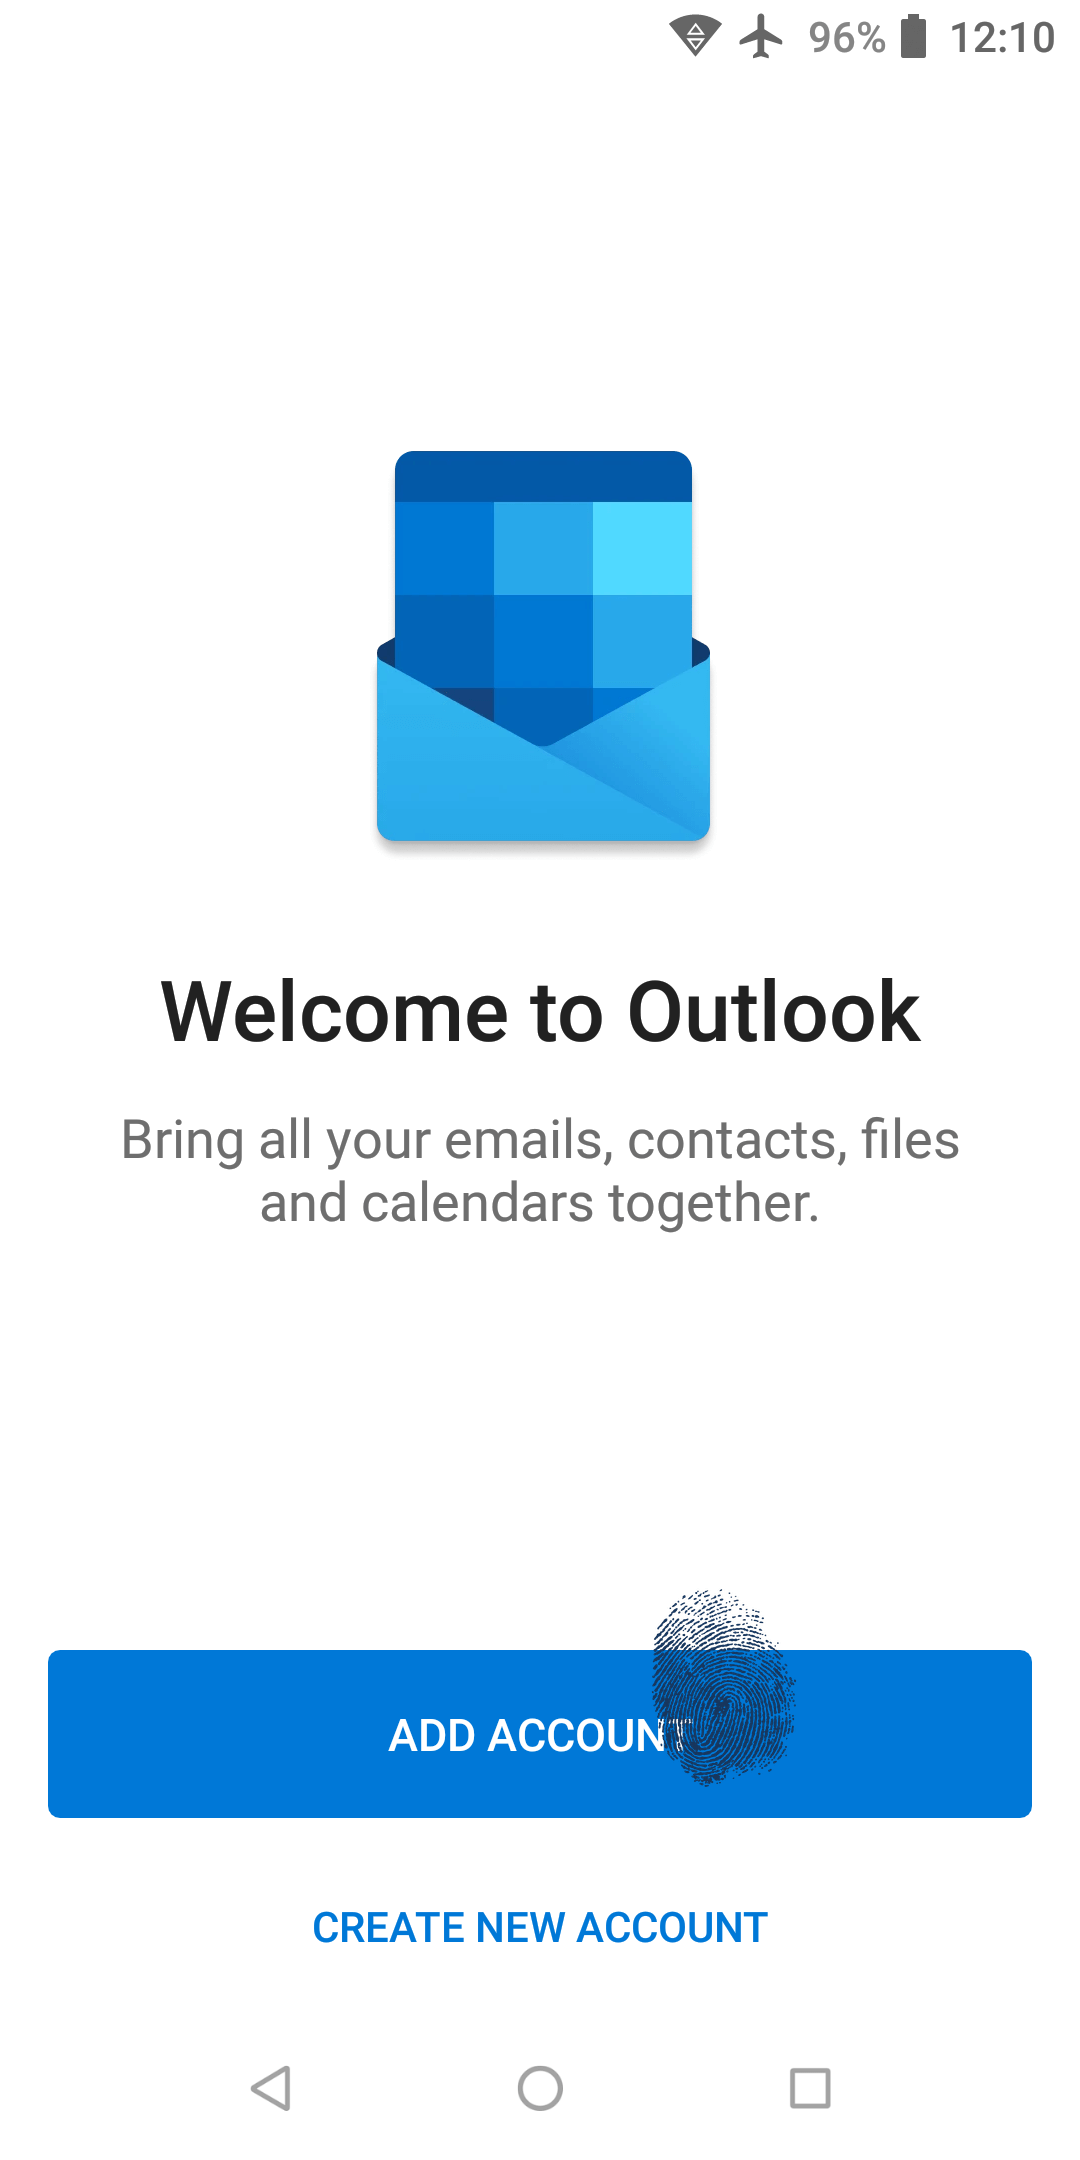 Outlook welcome screen